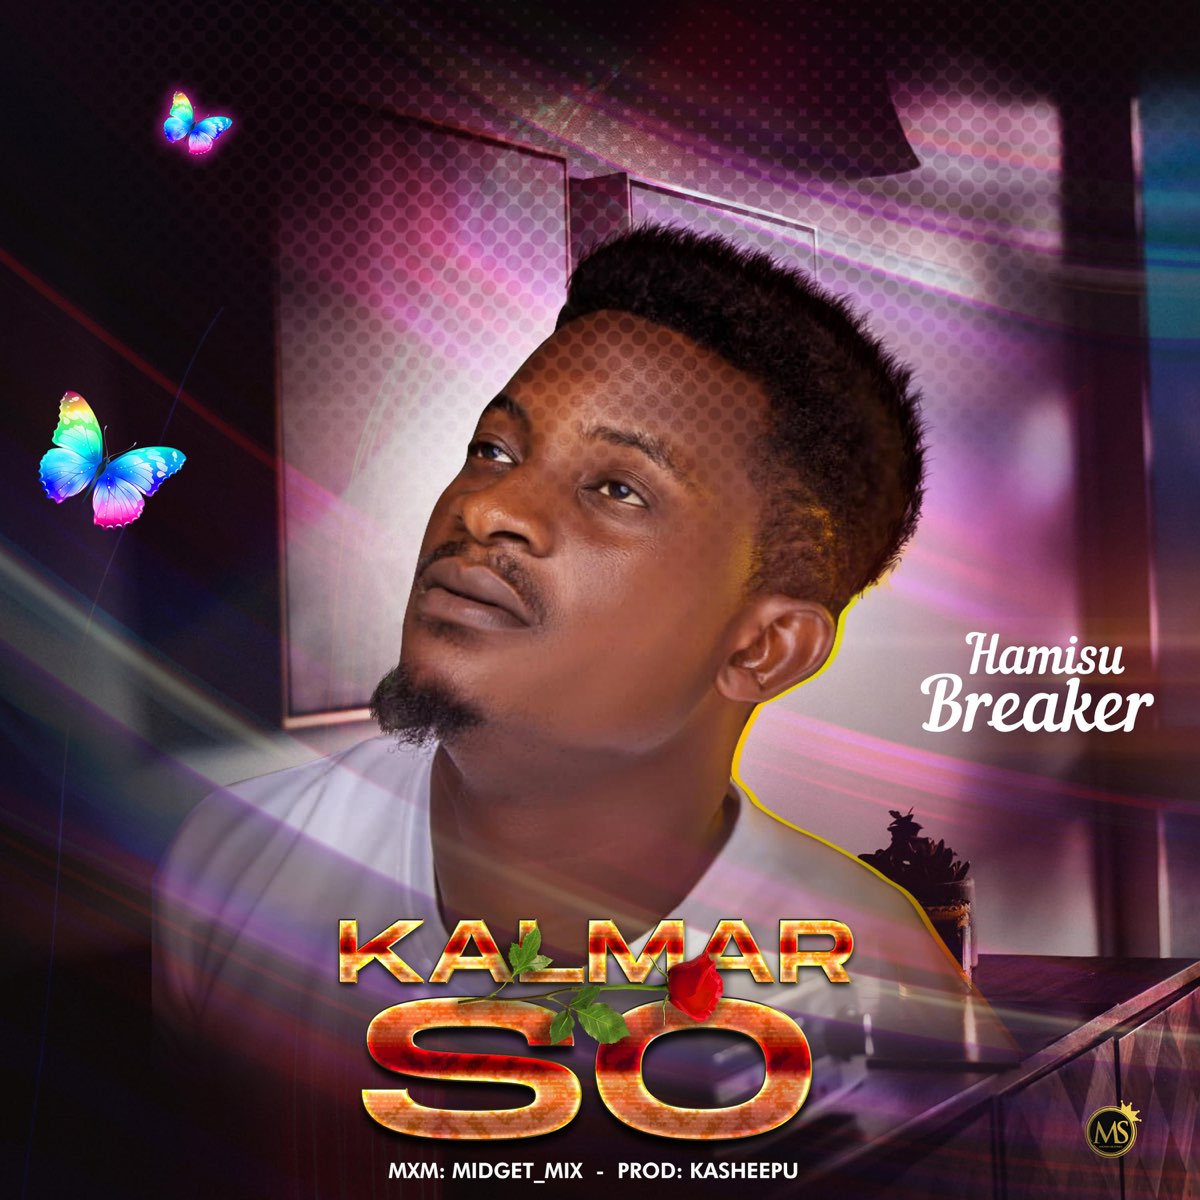 Kalmar So - Single by Hamisu Breaker on Apple Music